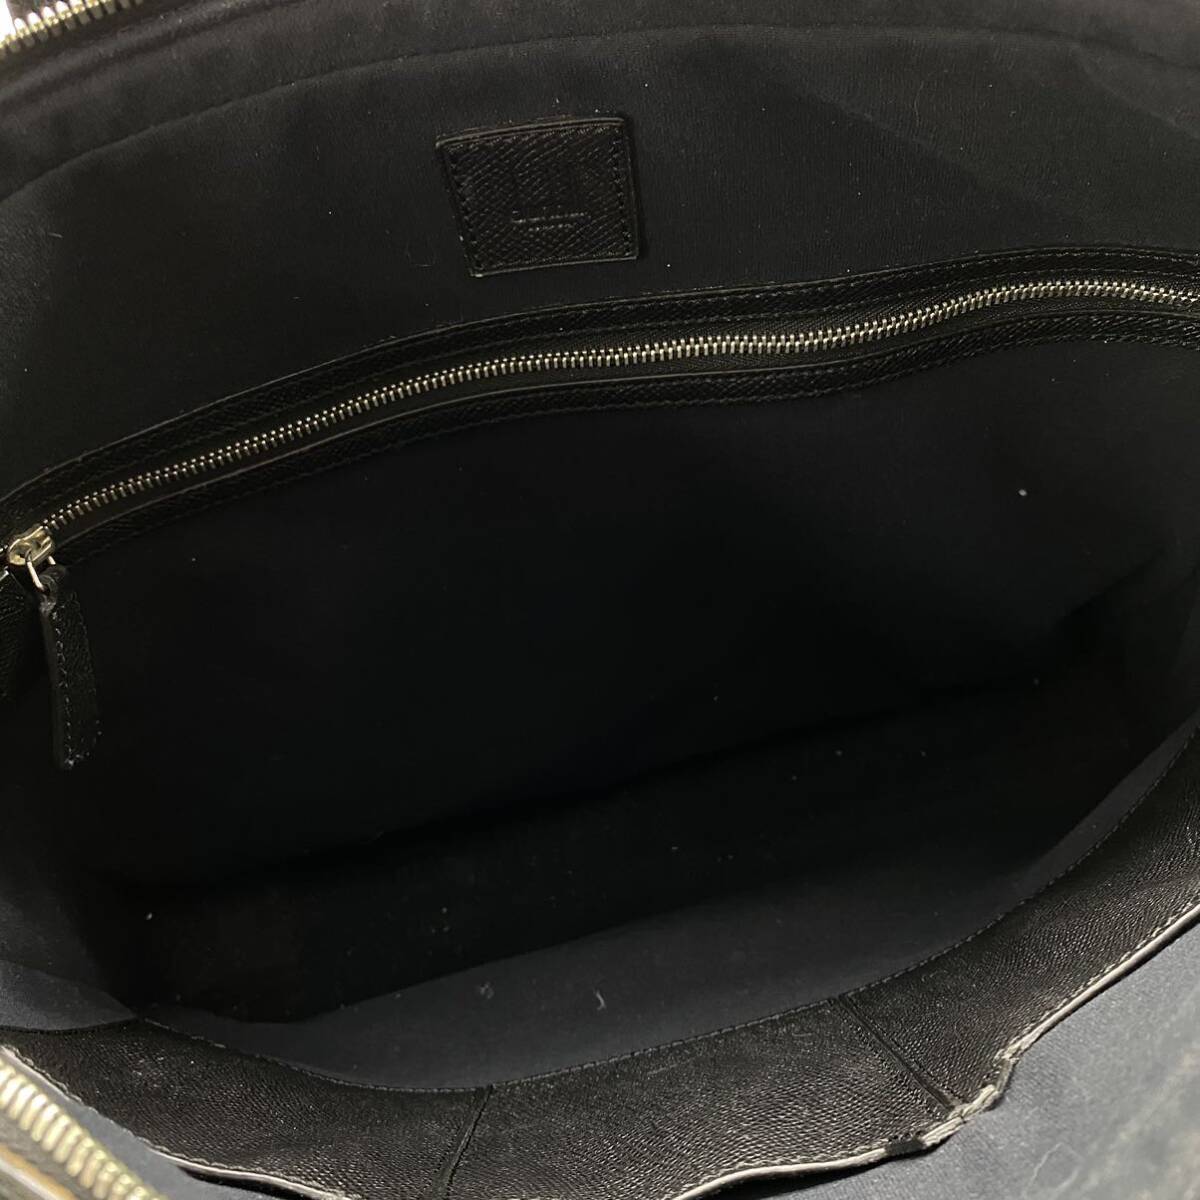 1 jpy [ beautiful goods * highest peak ] dunhill Dunhill handbag business bag briefcase board nkado gun Logo metal fittings black leather original leather 